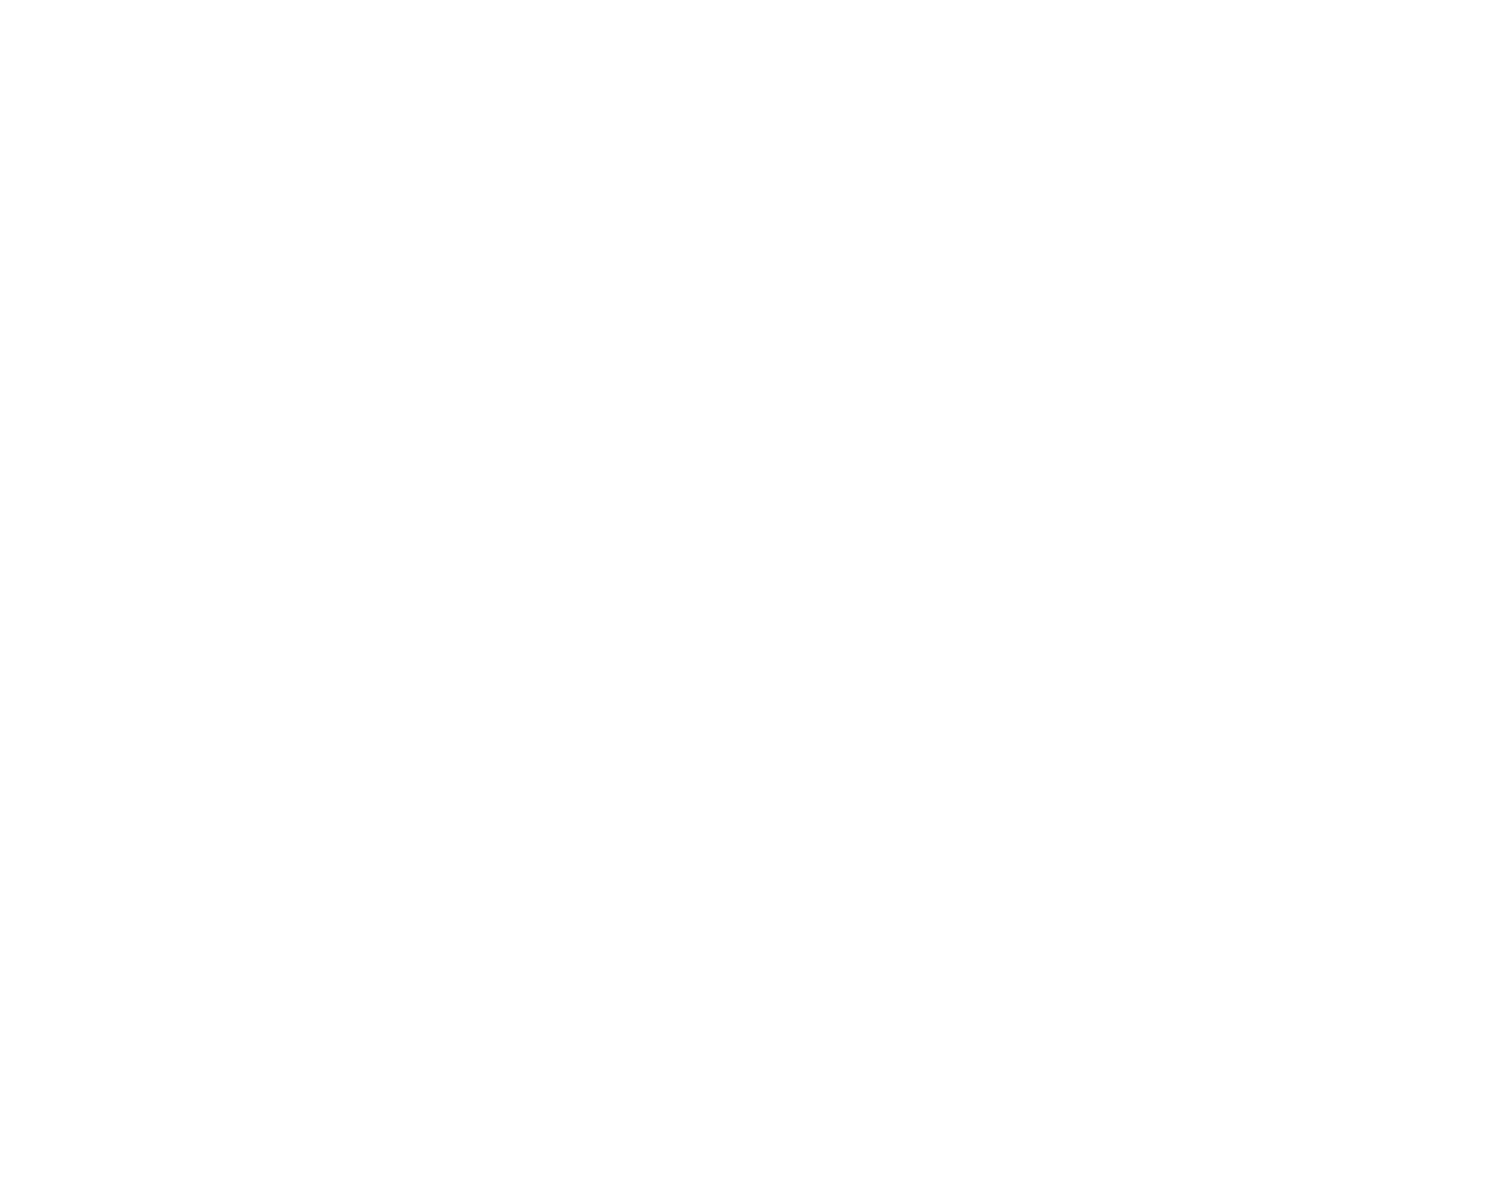 airCloset Report 6th Anniversary